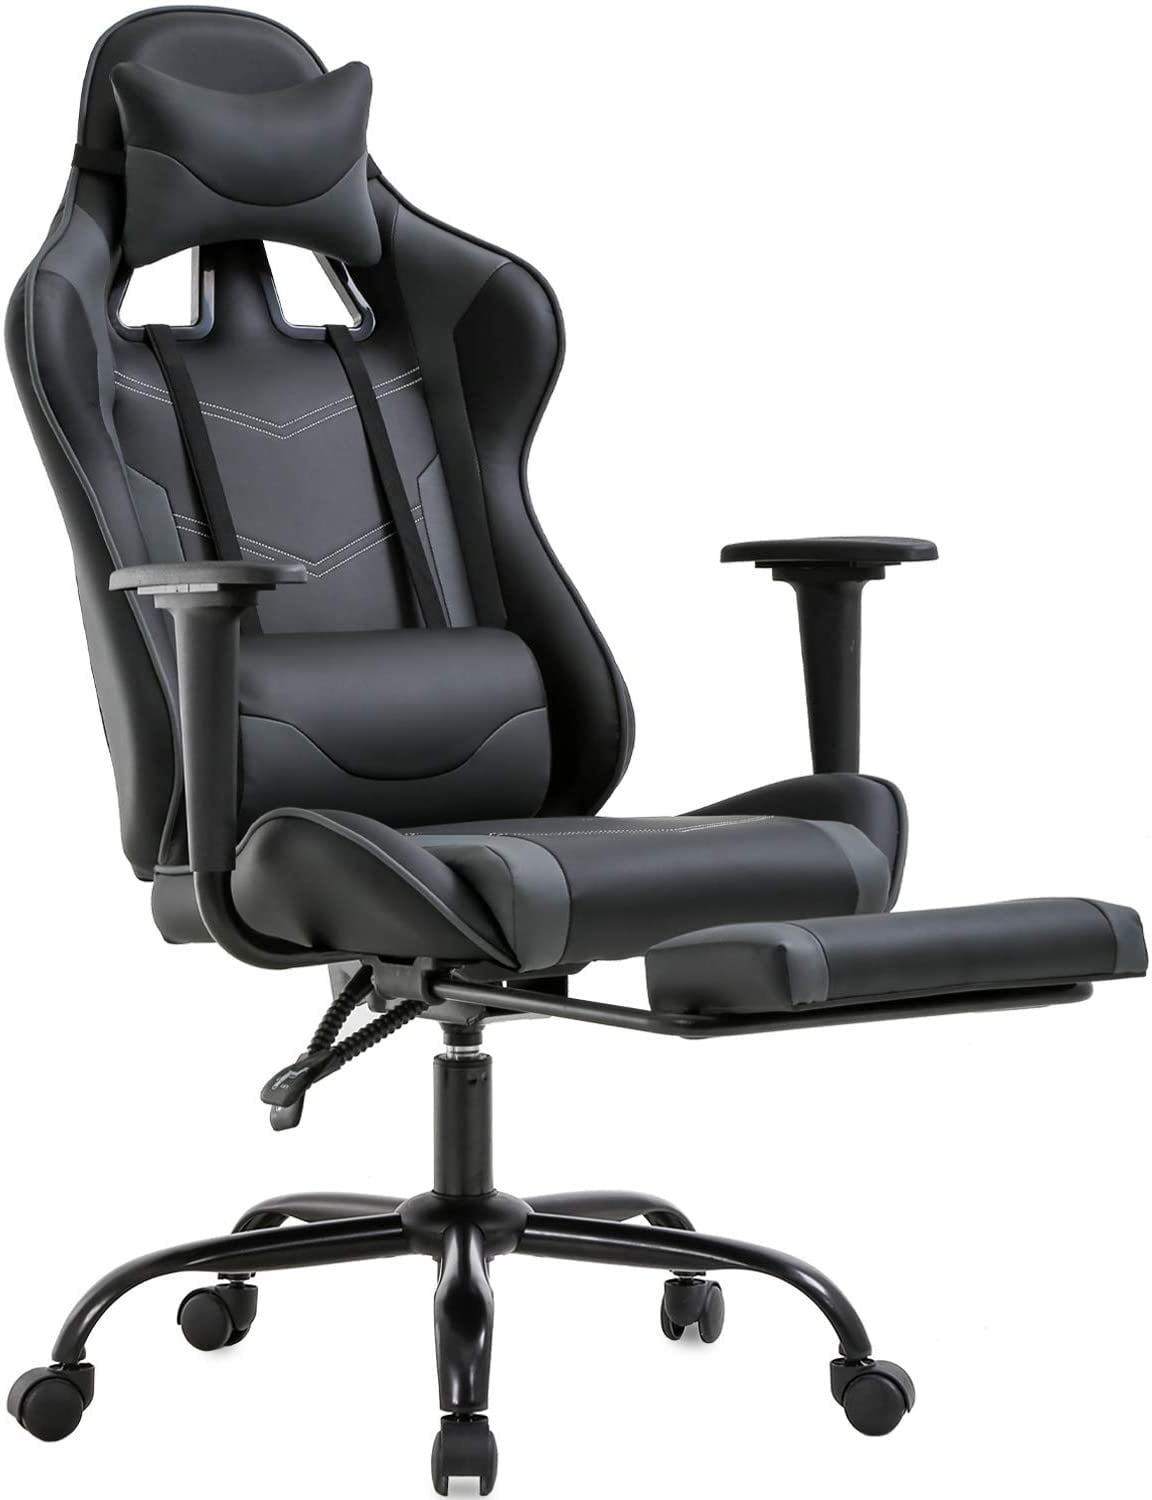 Ergonomic Executive Office Chair Gaming Computer Seat Lumbar Support Grey 